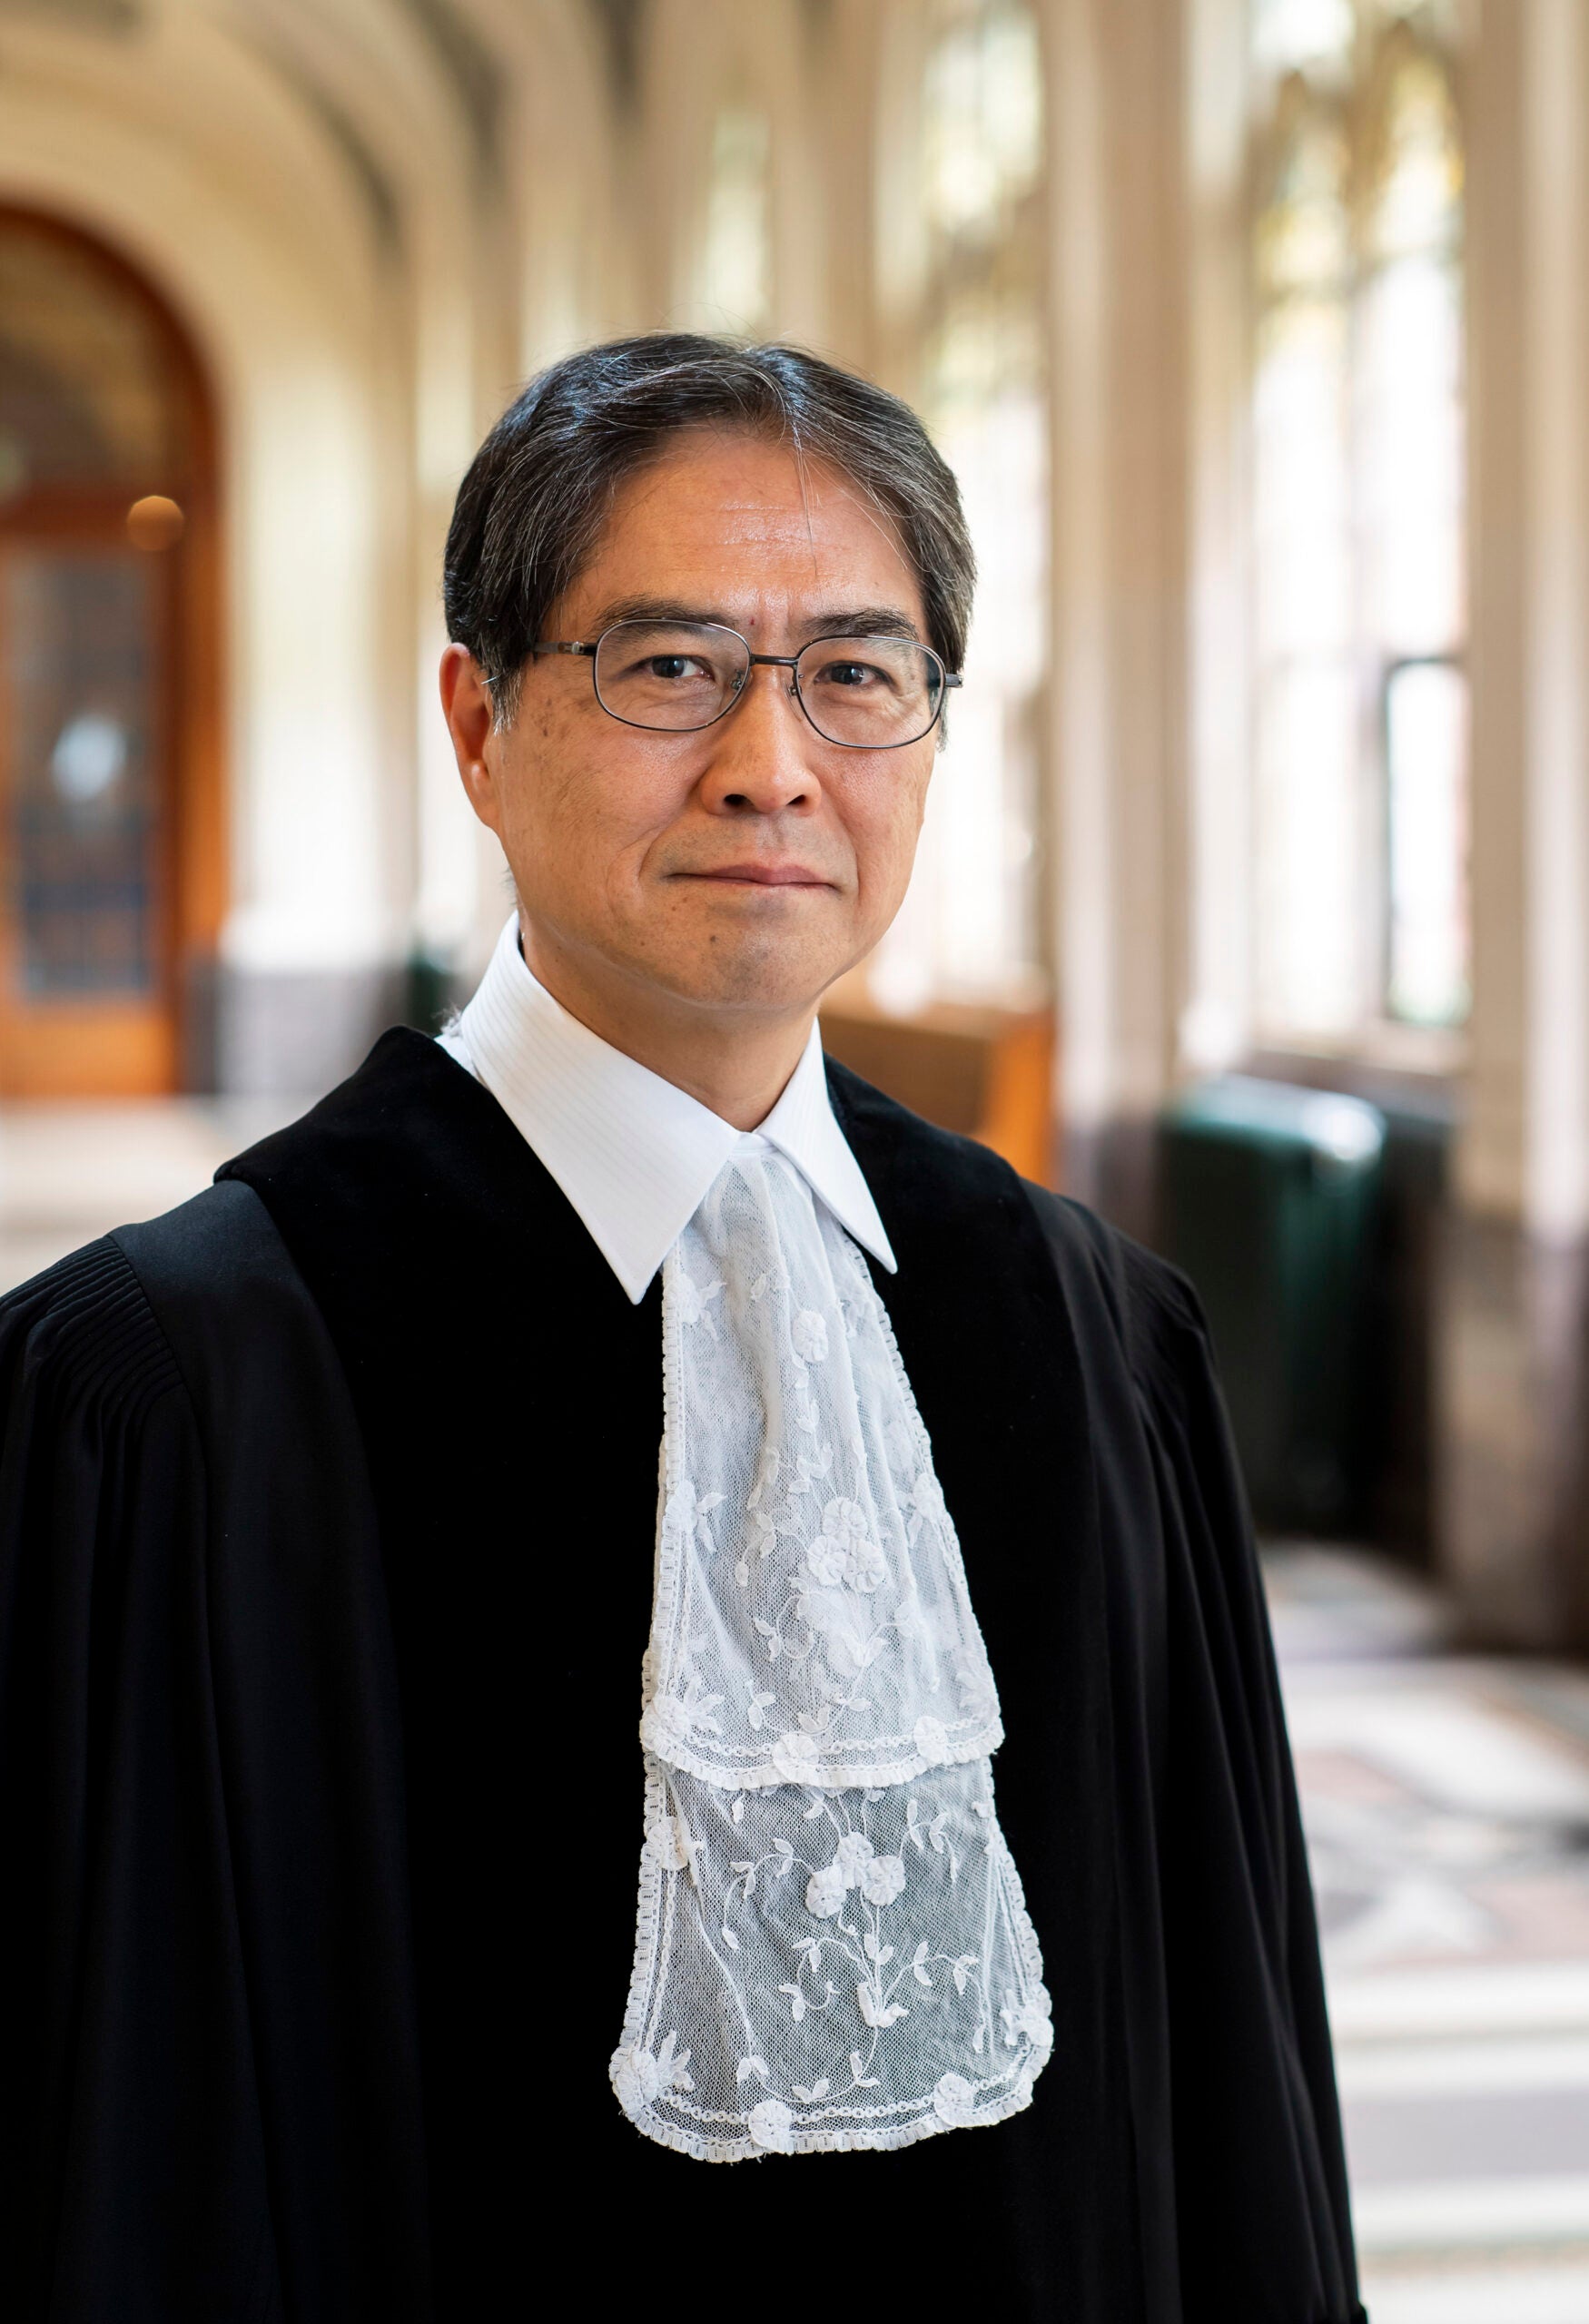 ICJ Judge Yuji Iwasawa